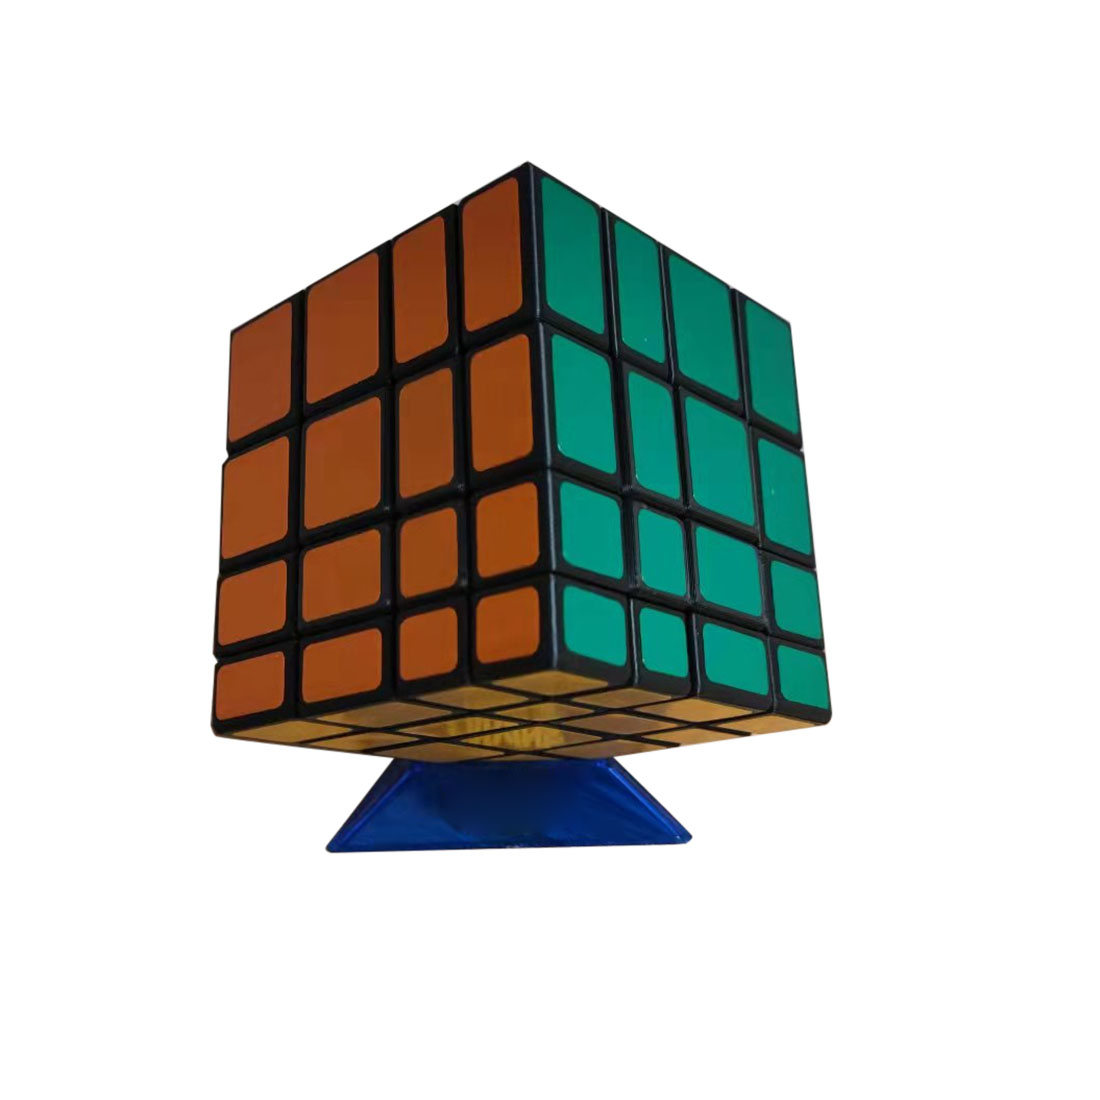 3D Printed Super 4x4 Mirror Speed Cube